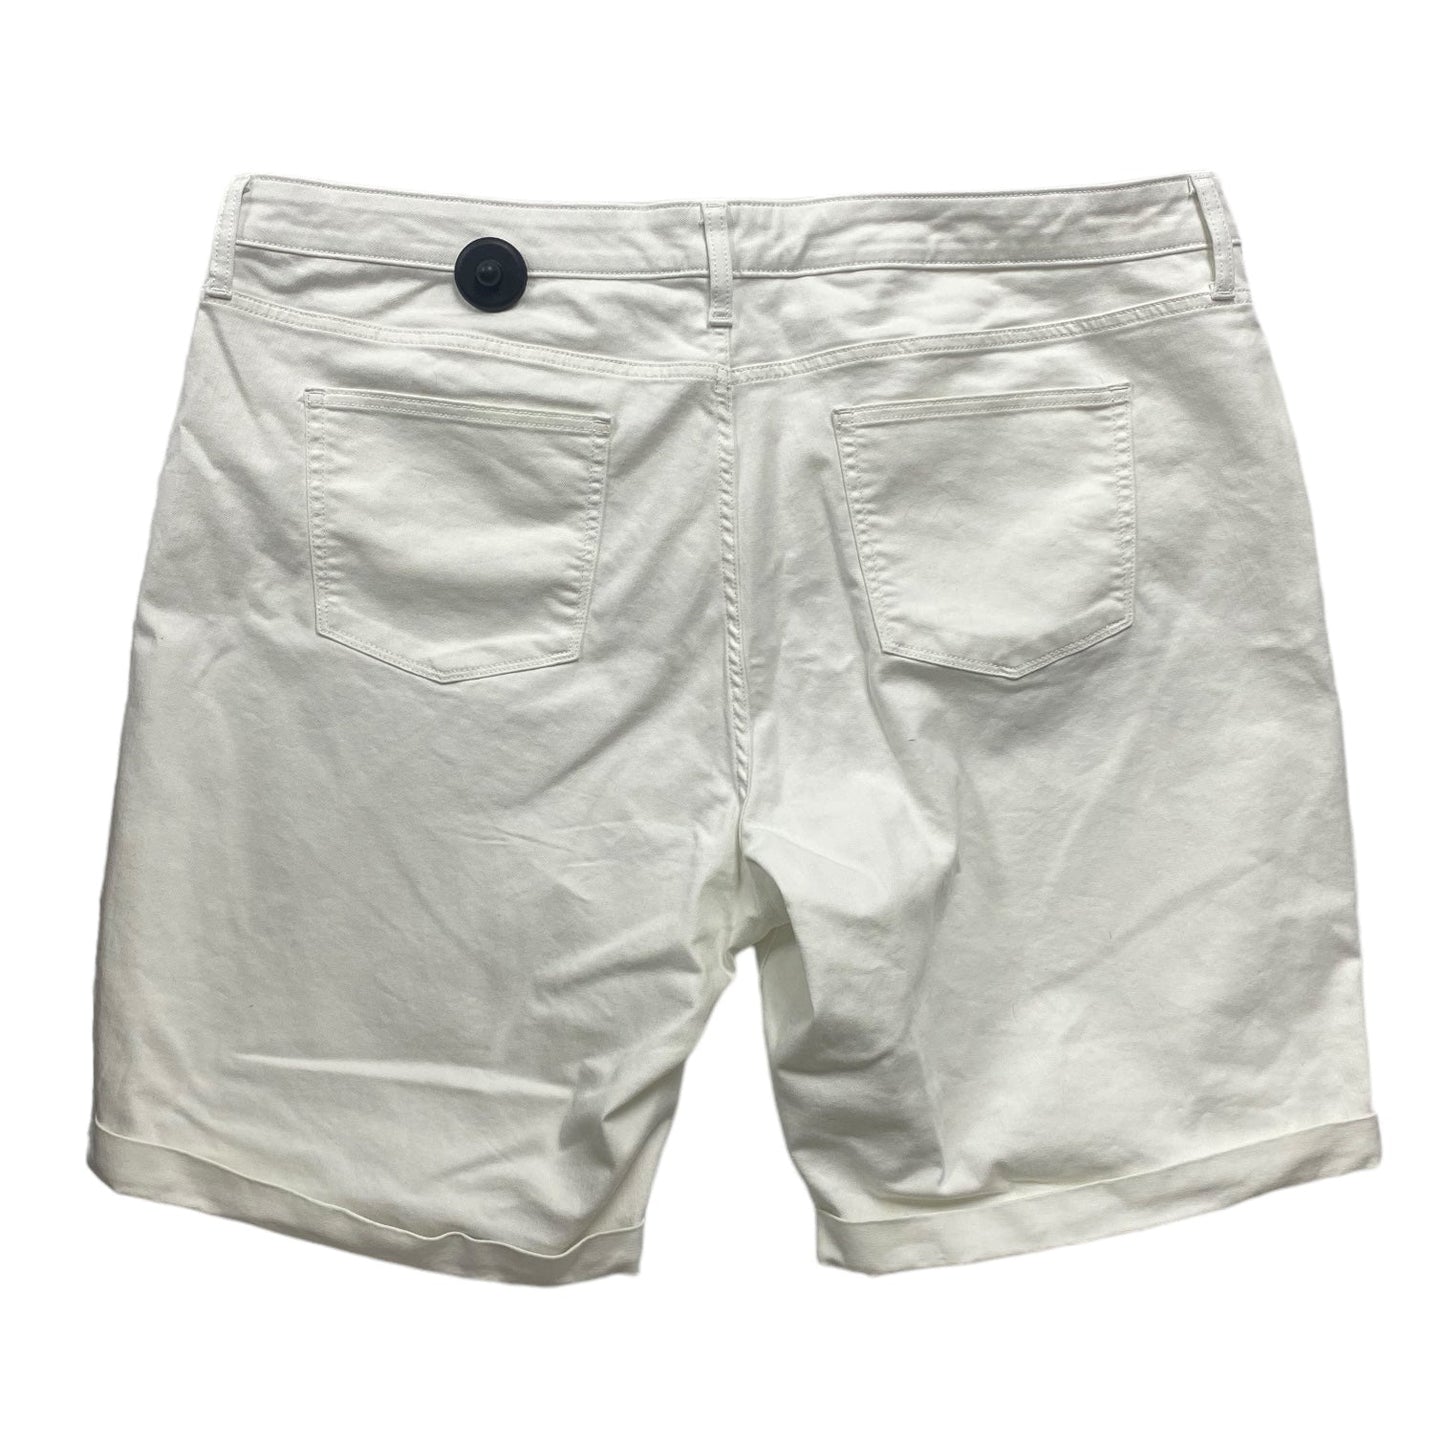 White Shorts St Johns Bay, Size 4x